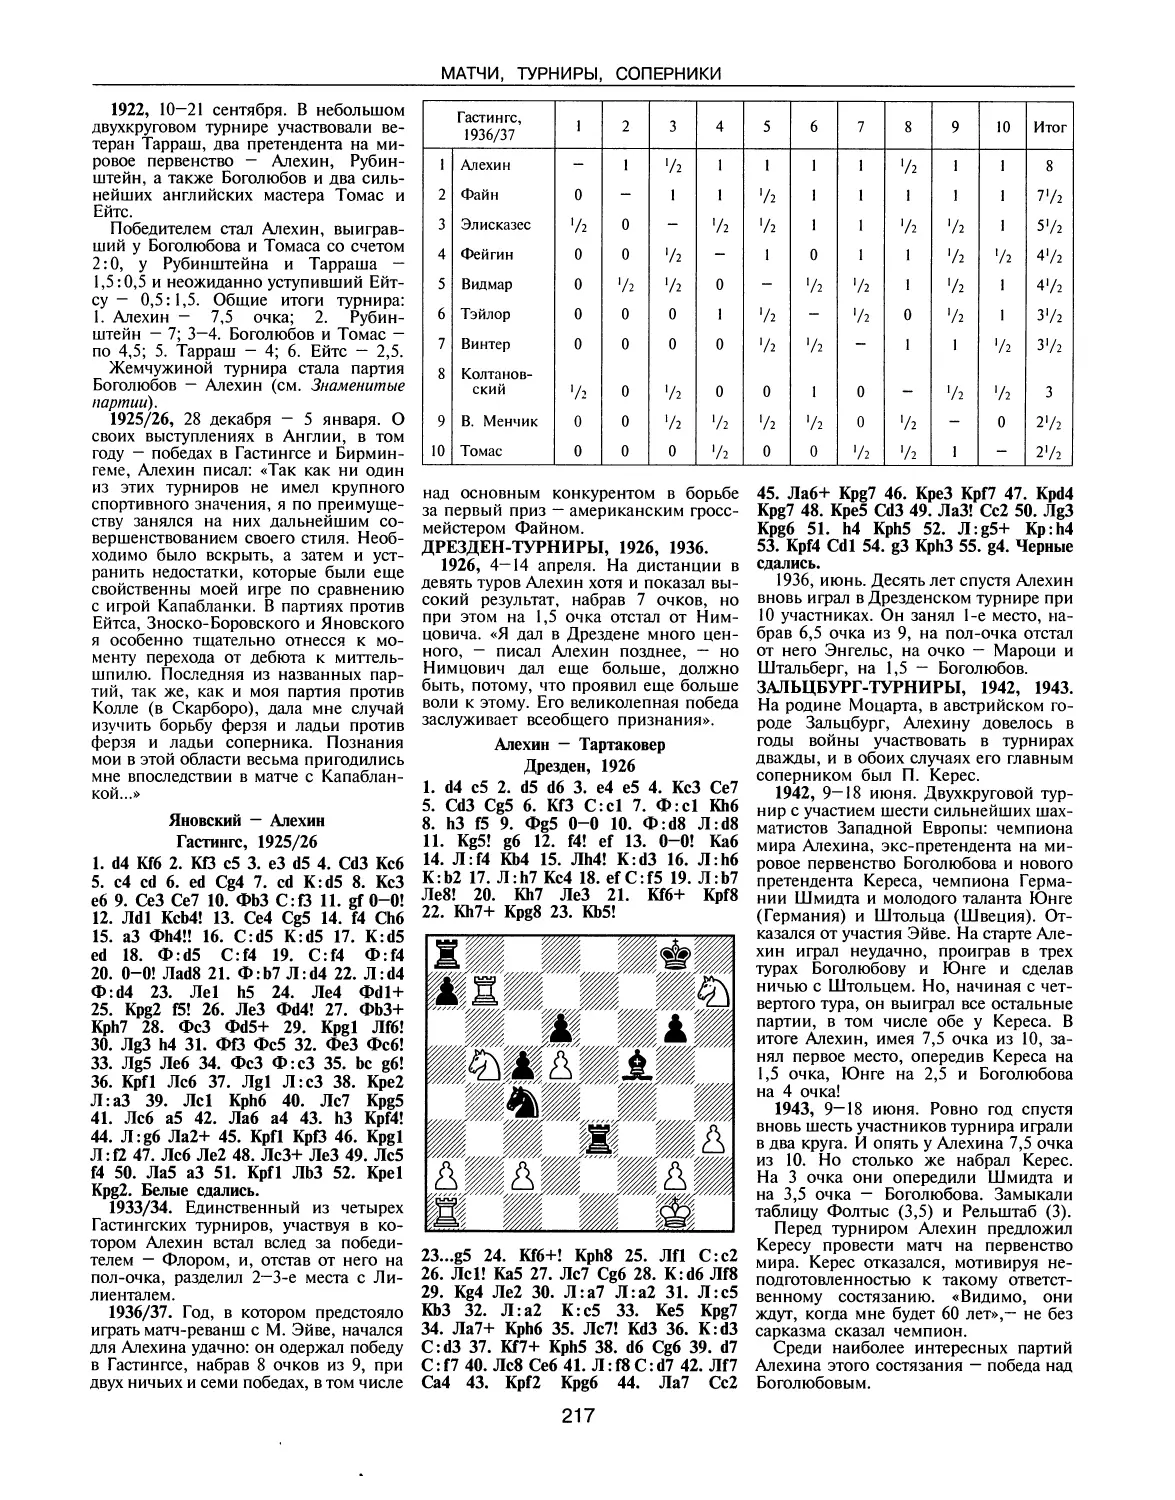 Дрезден-турнир, 1926
Зальцбург-турниры, 1942, 1943